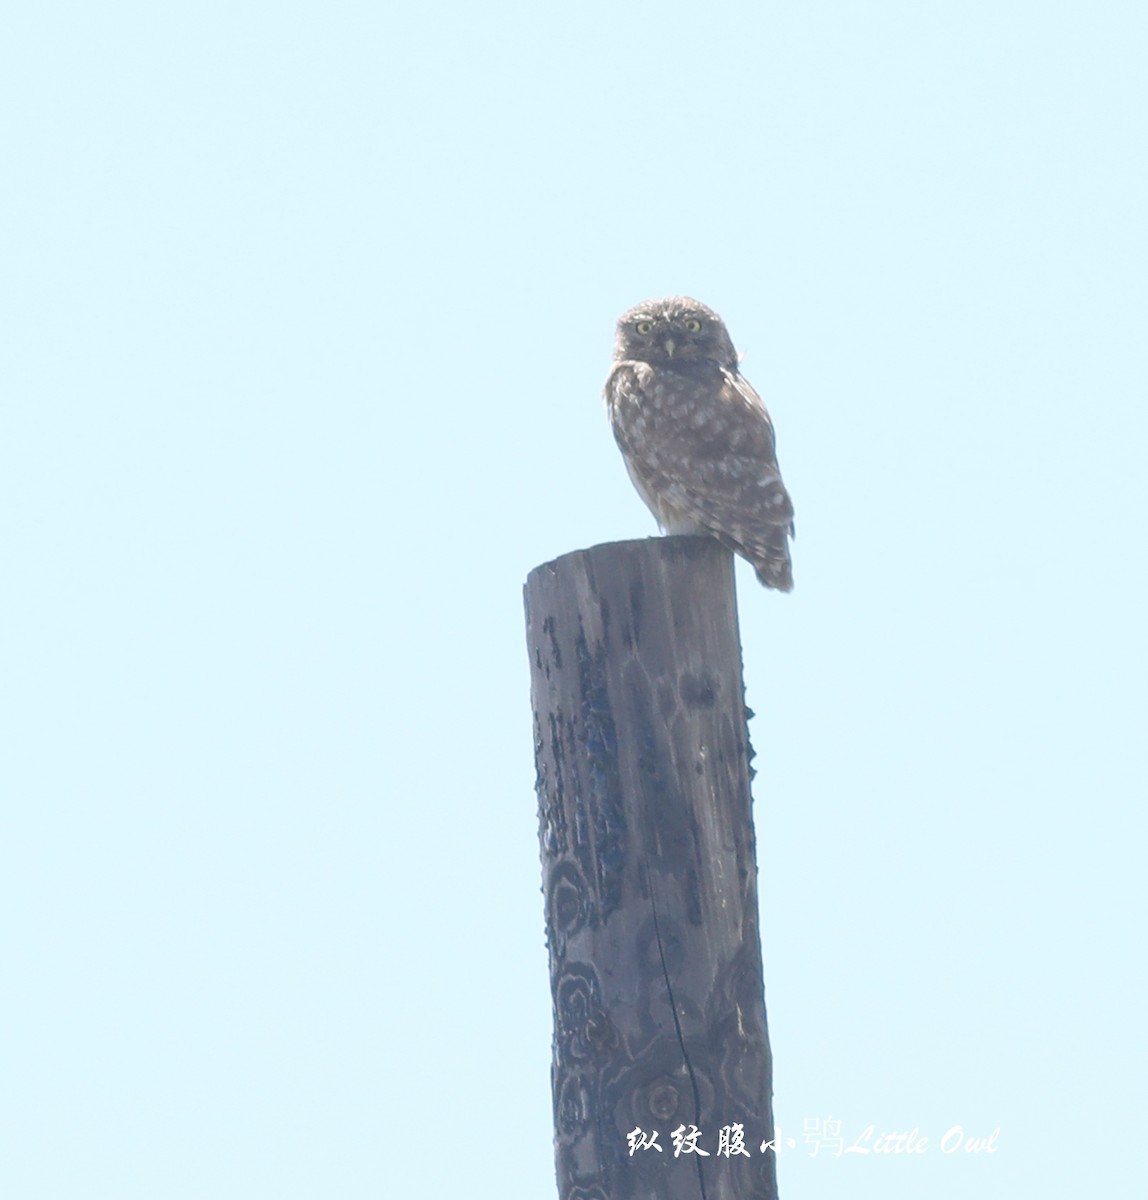 Little Owl - Qiang Zeng